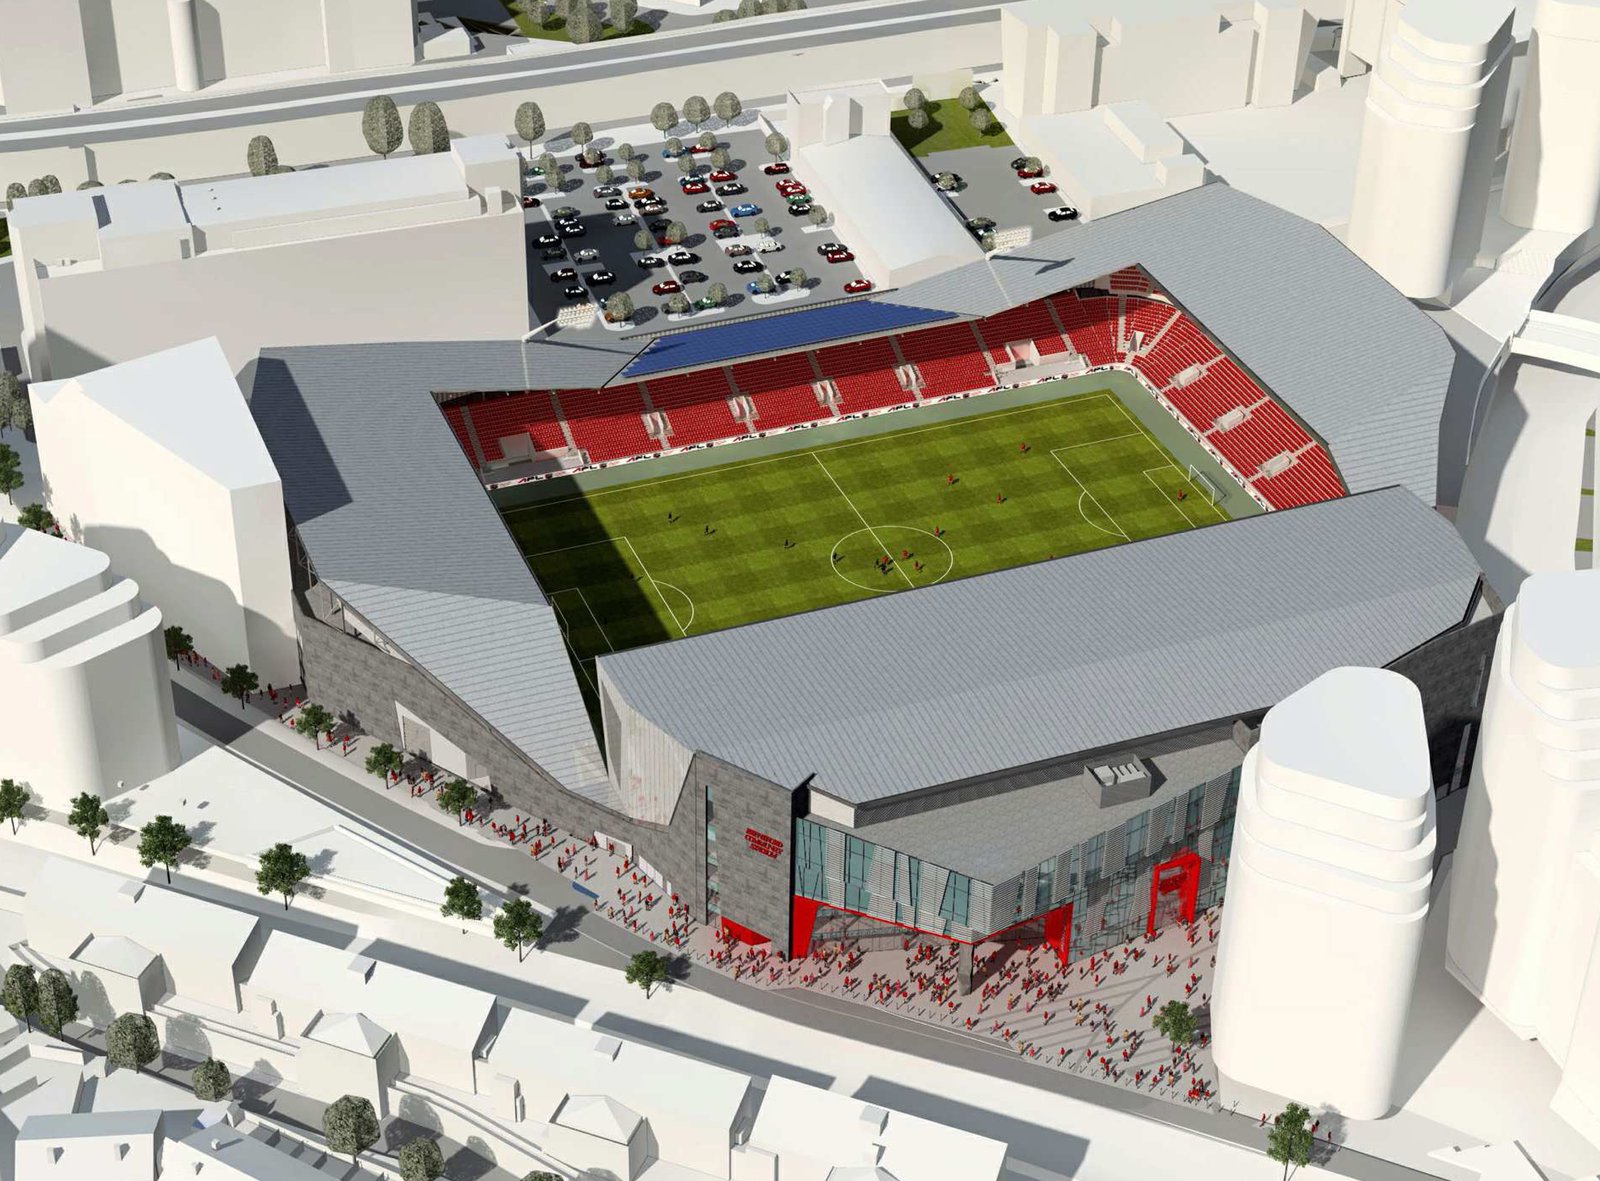 Design: Brentford Community Stadium – StadiumDB.com